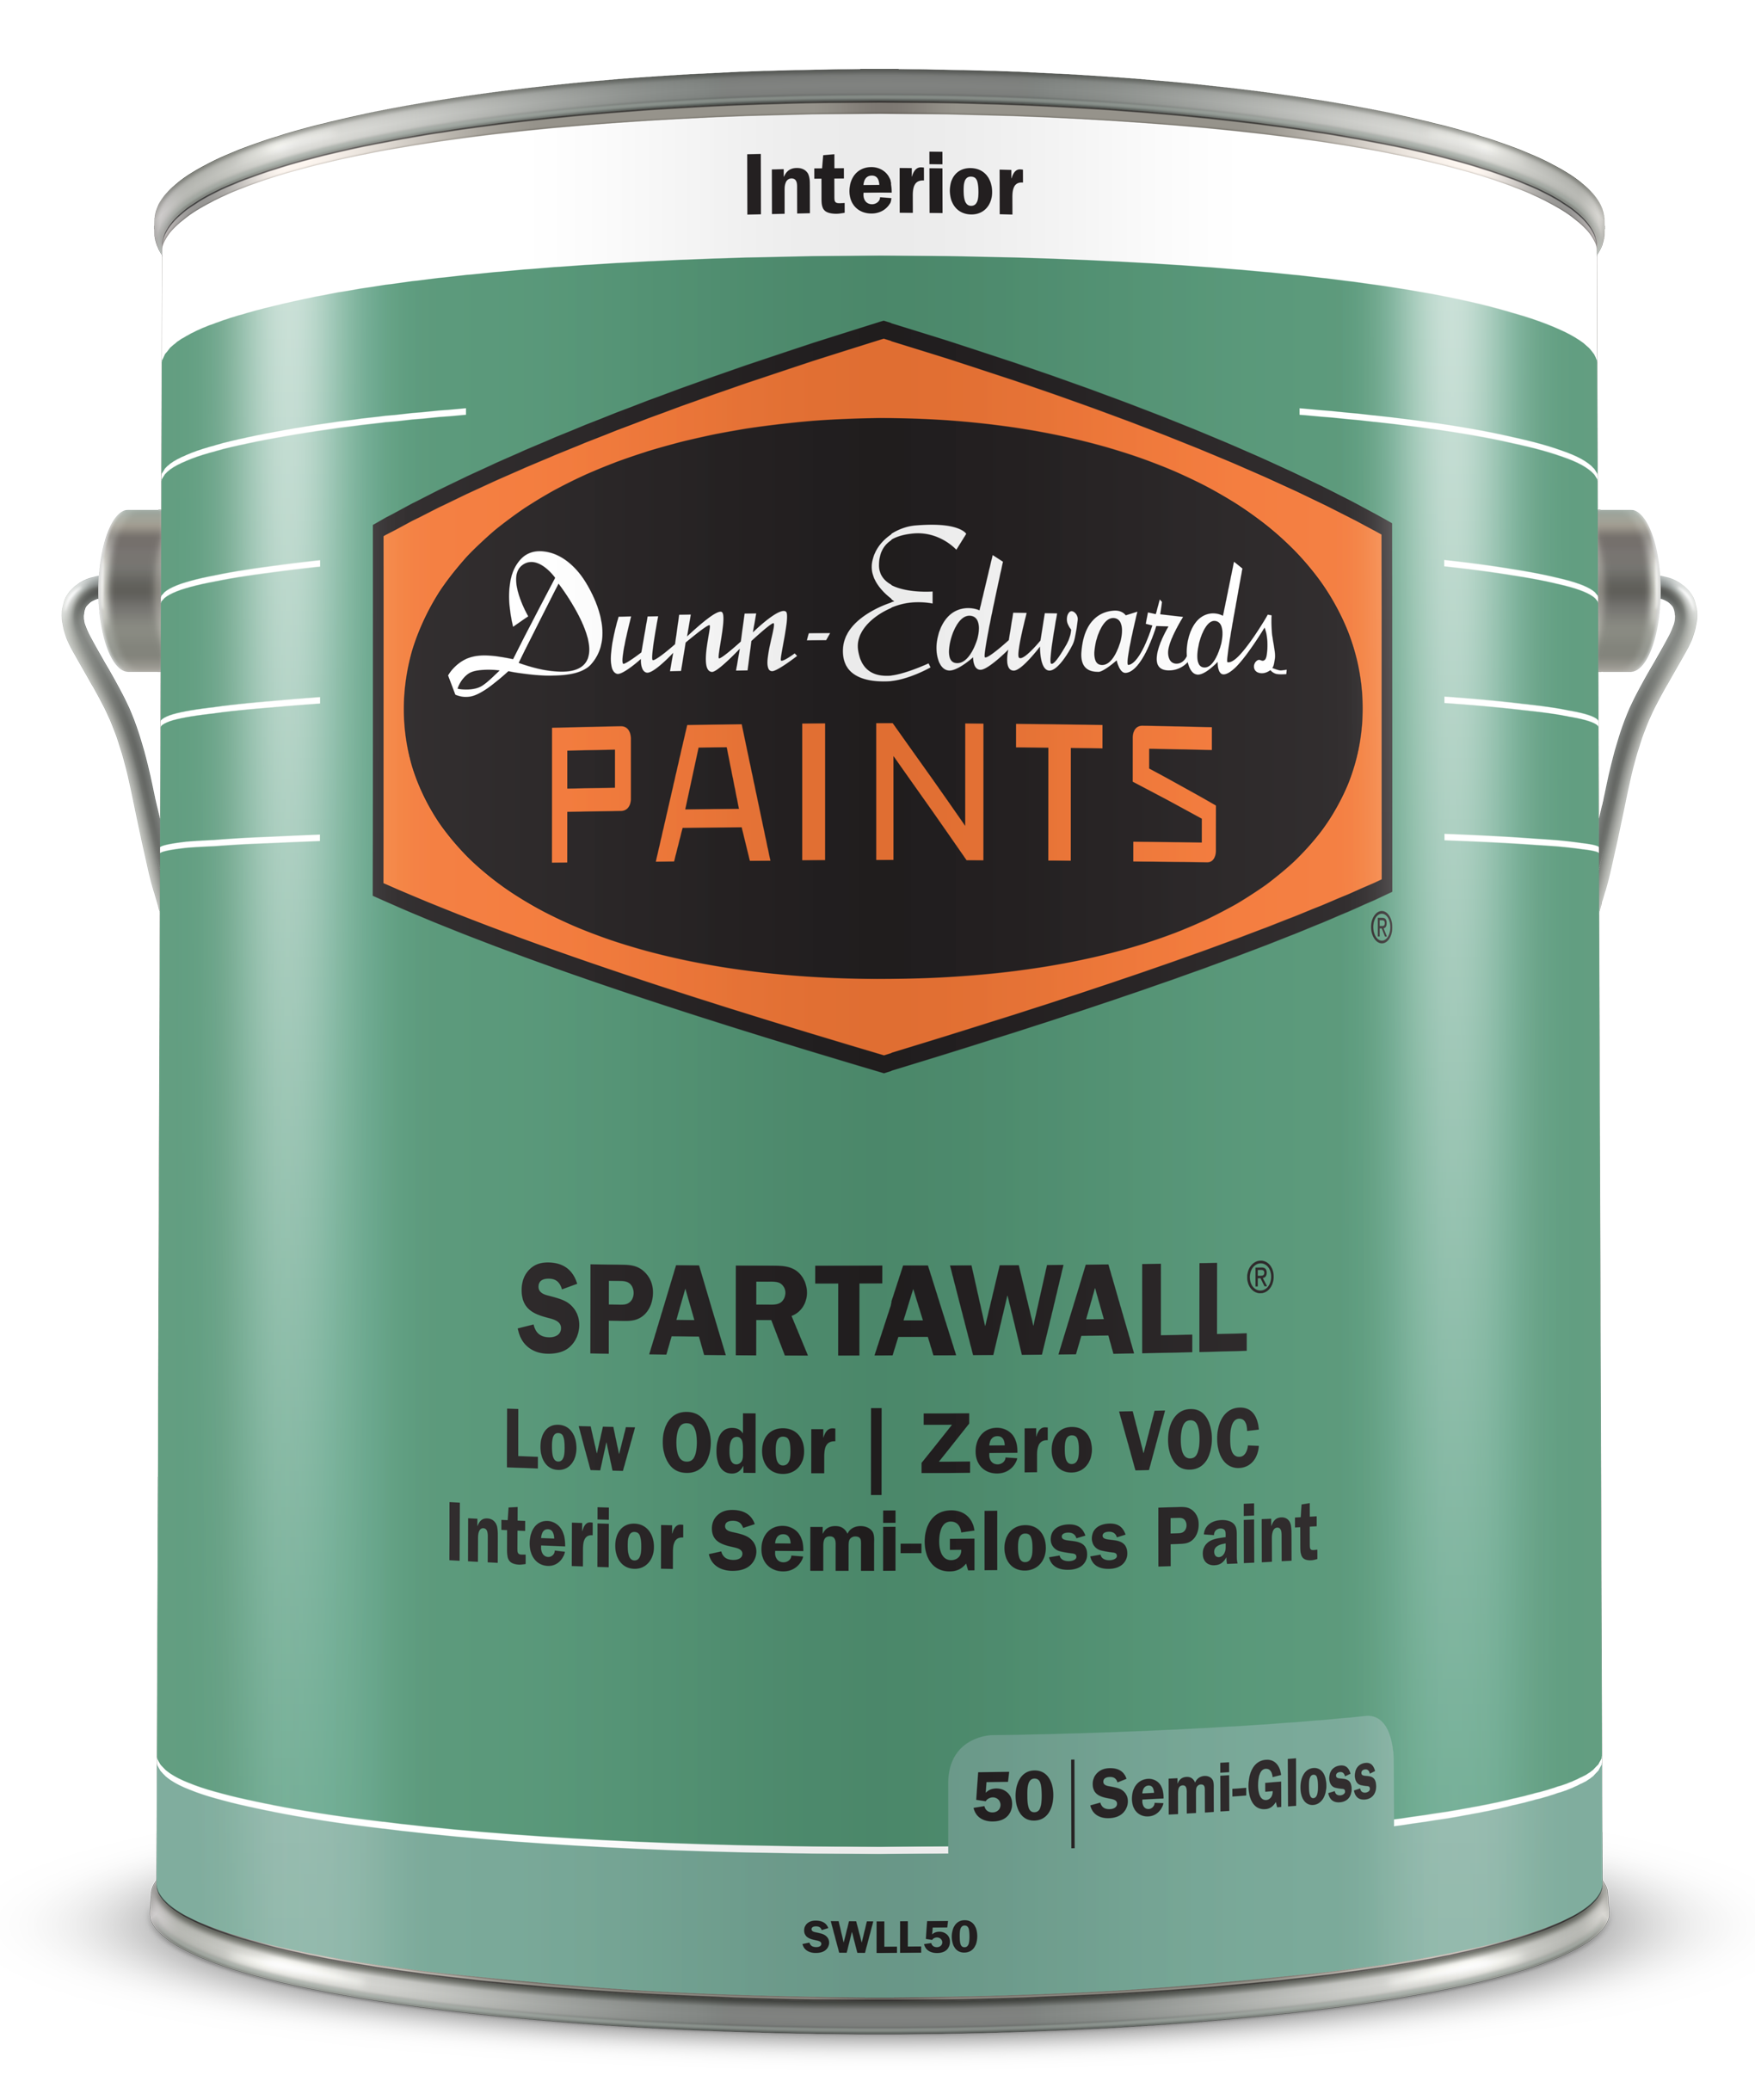 SPARTAWALL Interior Semi-Gloss Paint Can